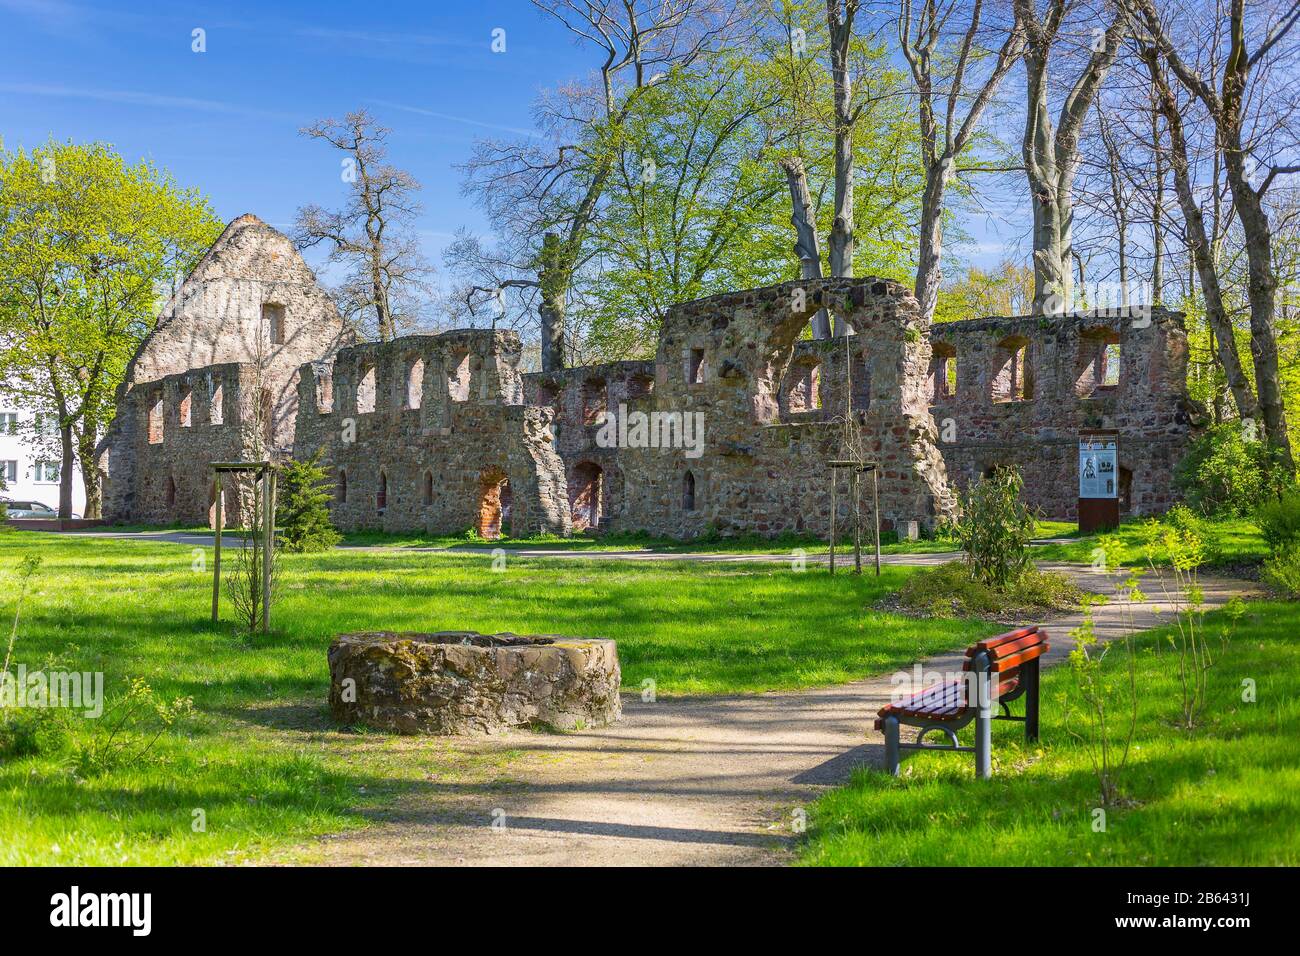 Ruin of the monastery Nimbschen, Grimma, Saxony, Germany Stock Photo